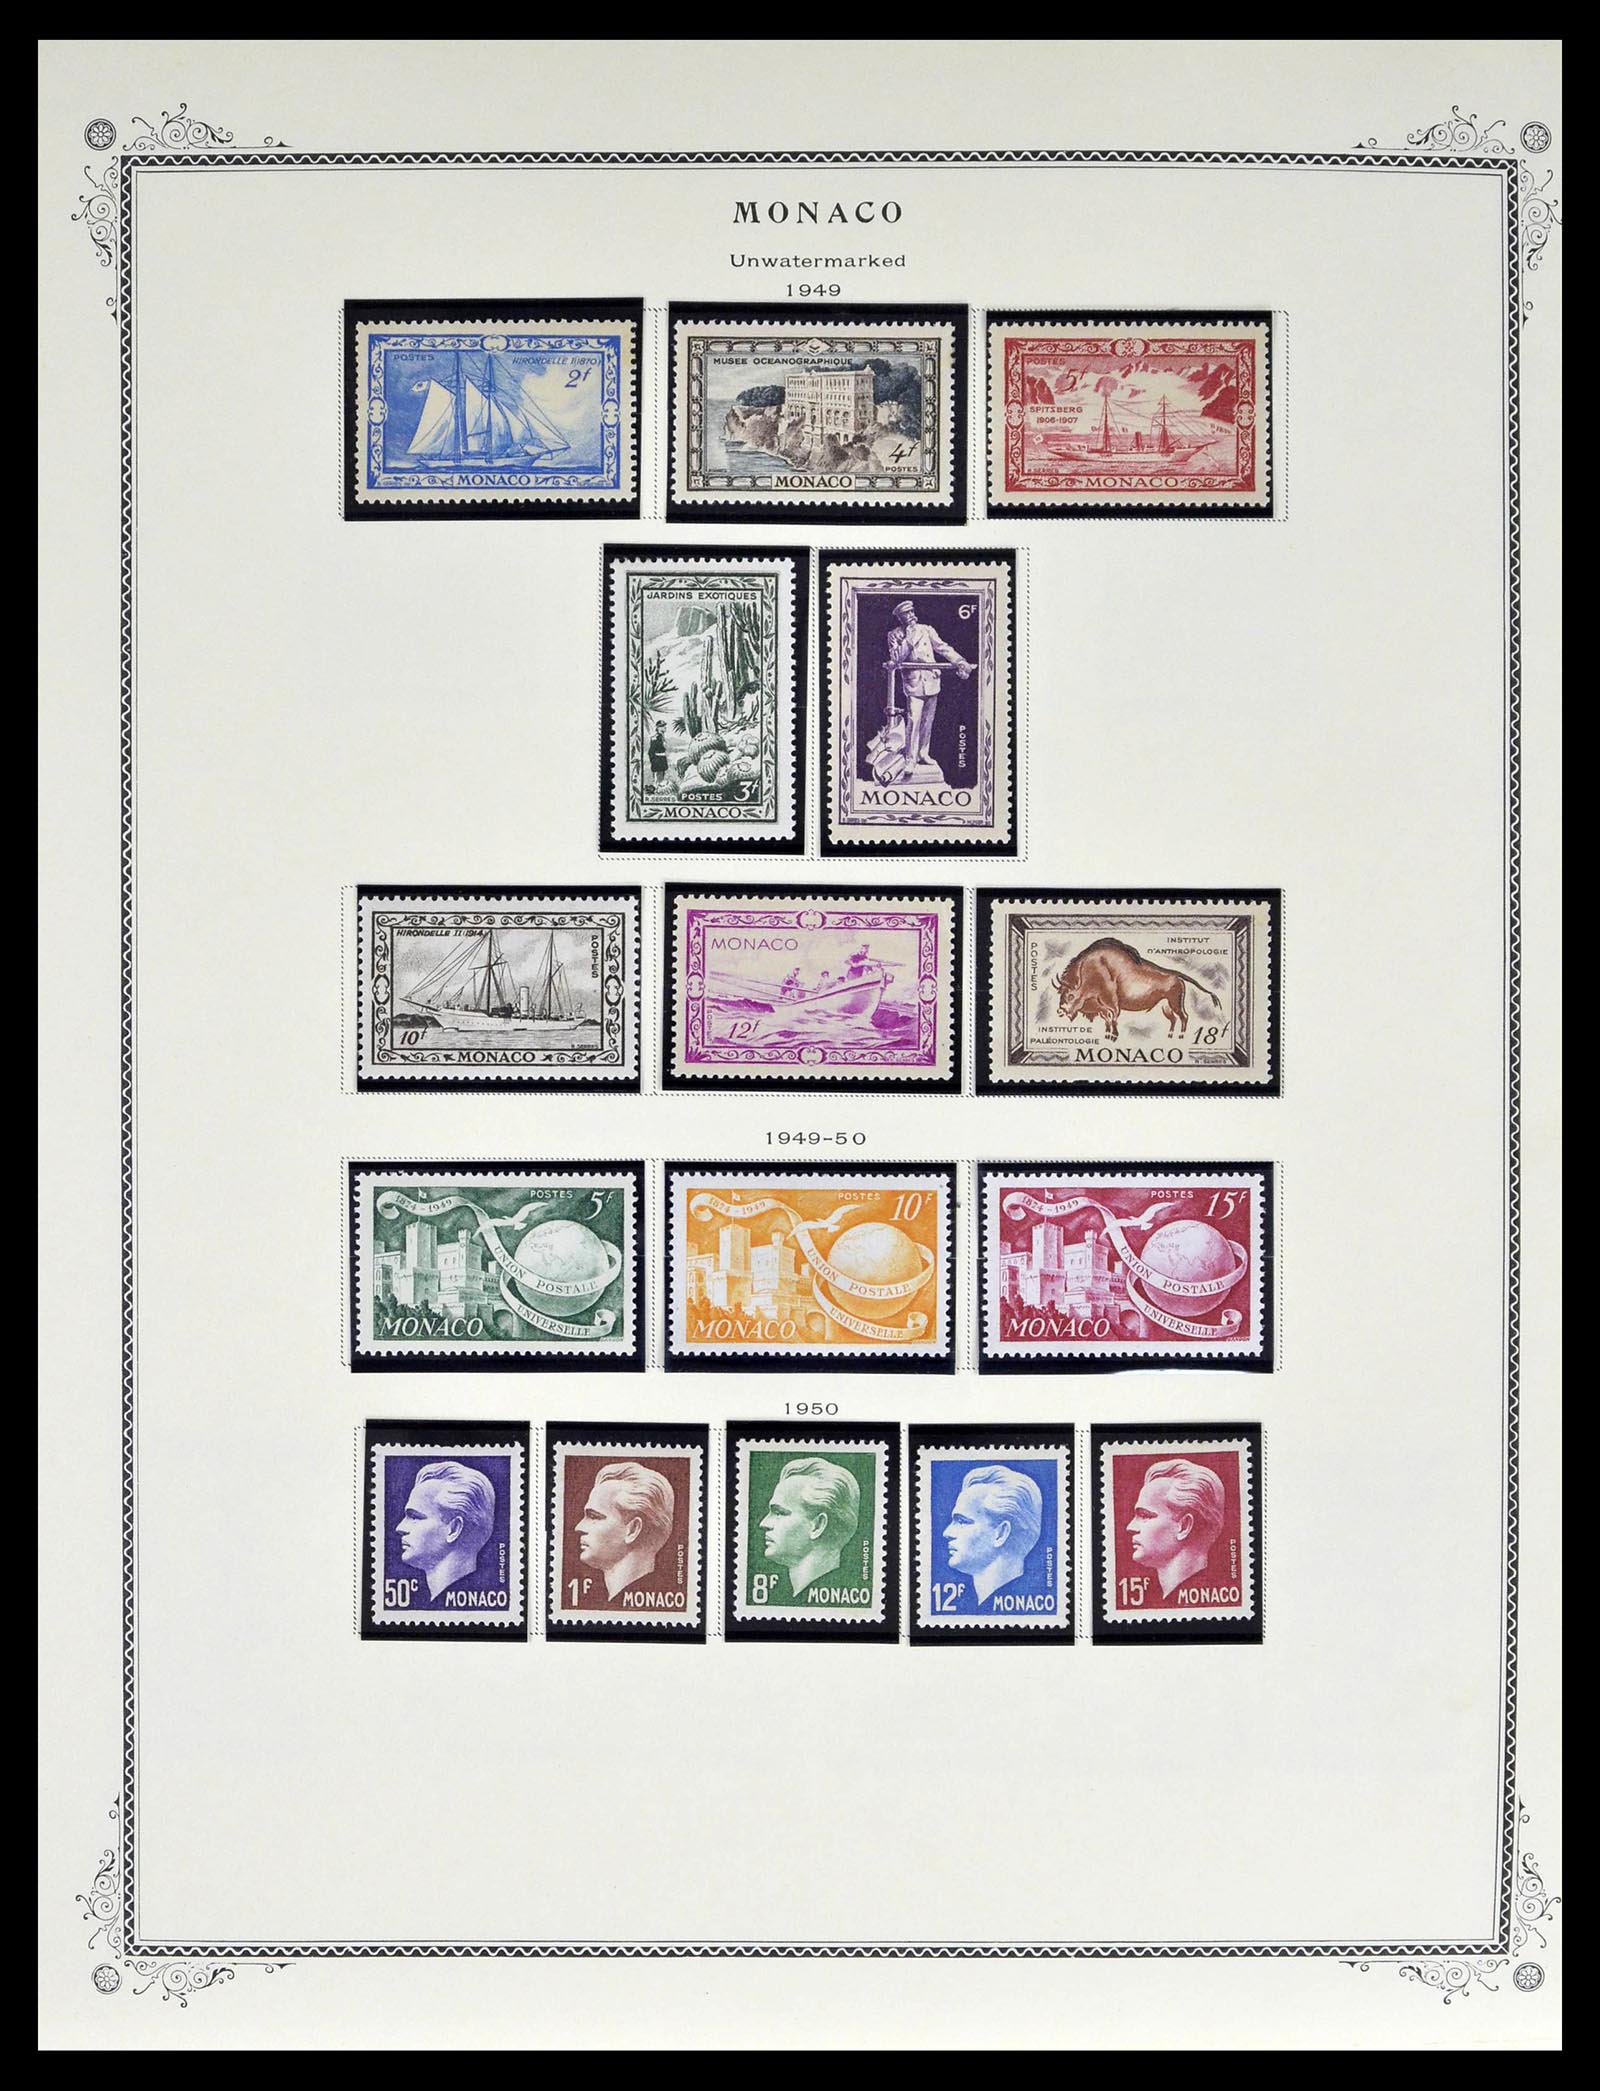 39181 0027 - Stamp collection 39181 Monaco 1885-1980.